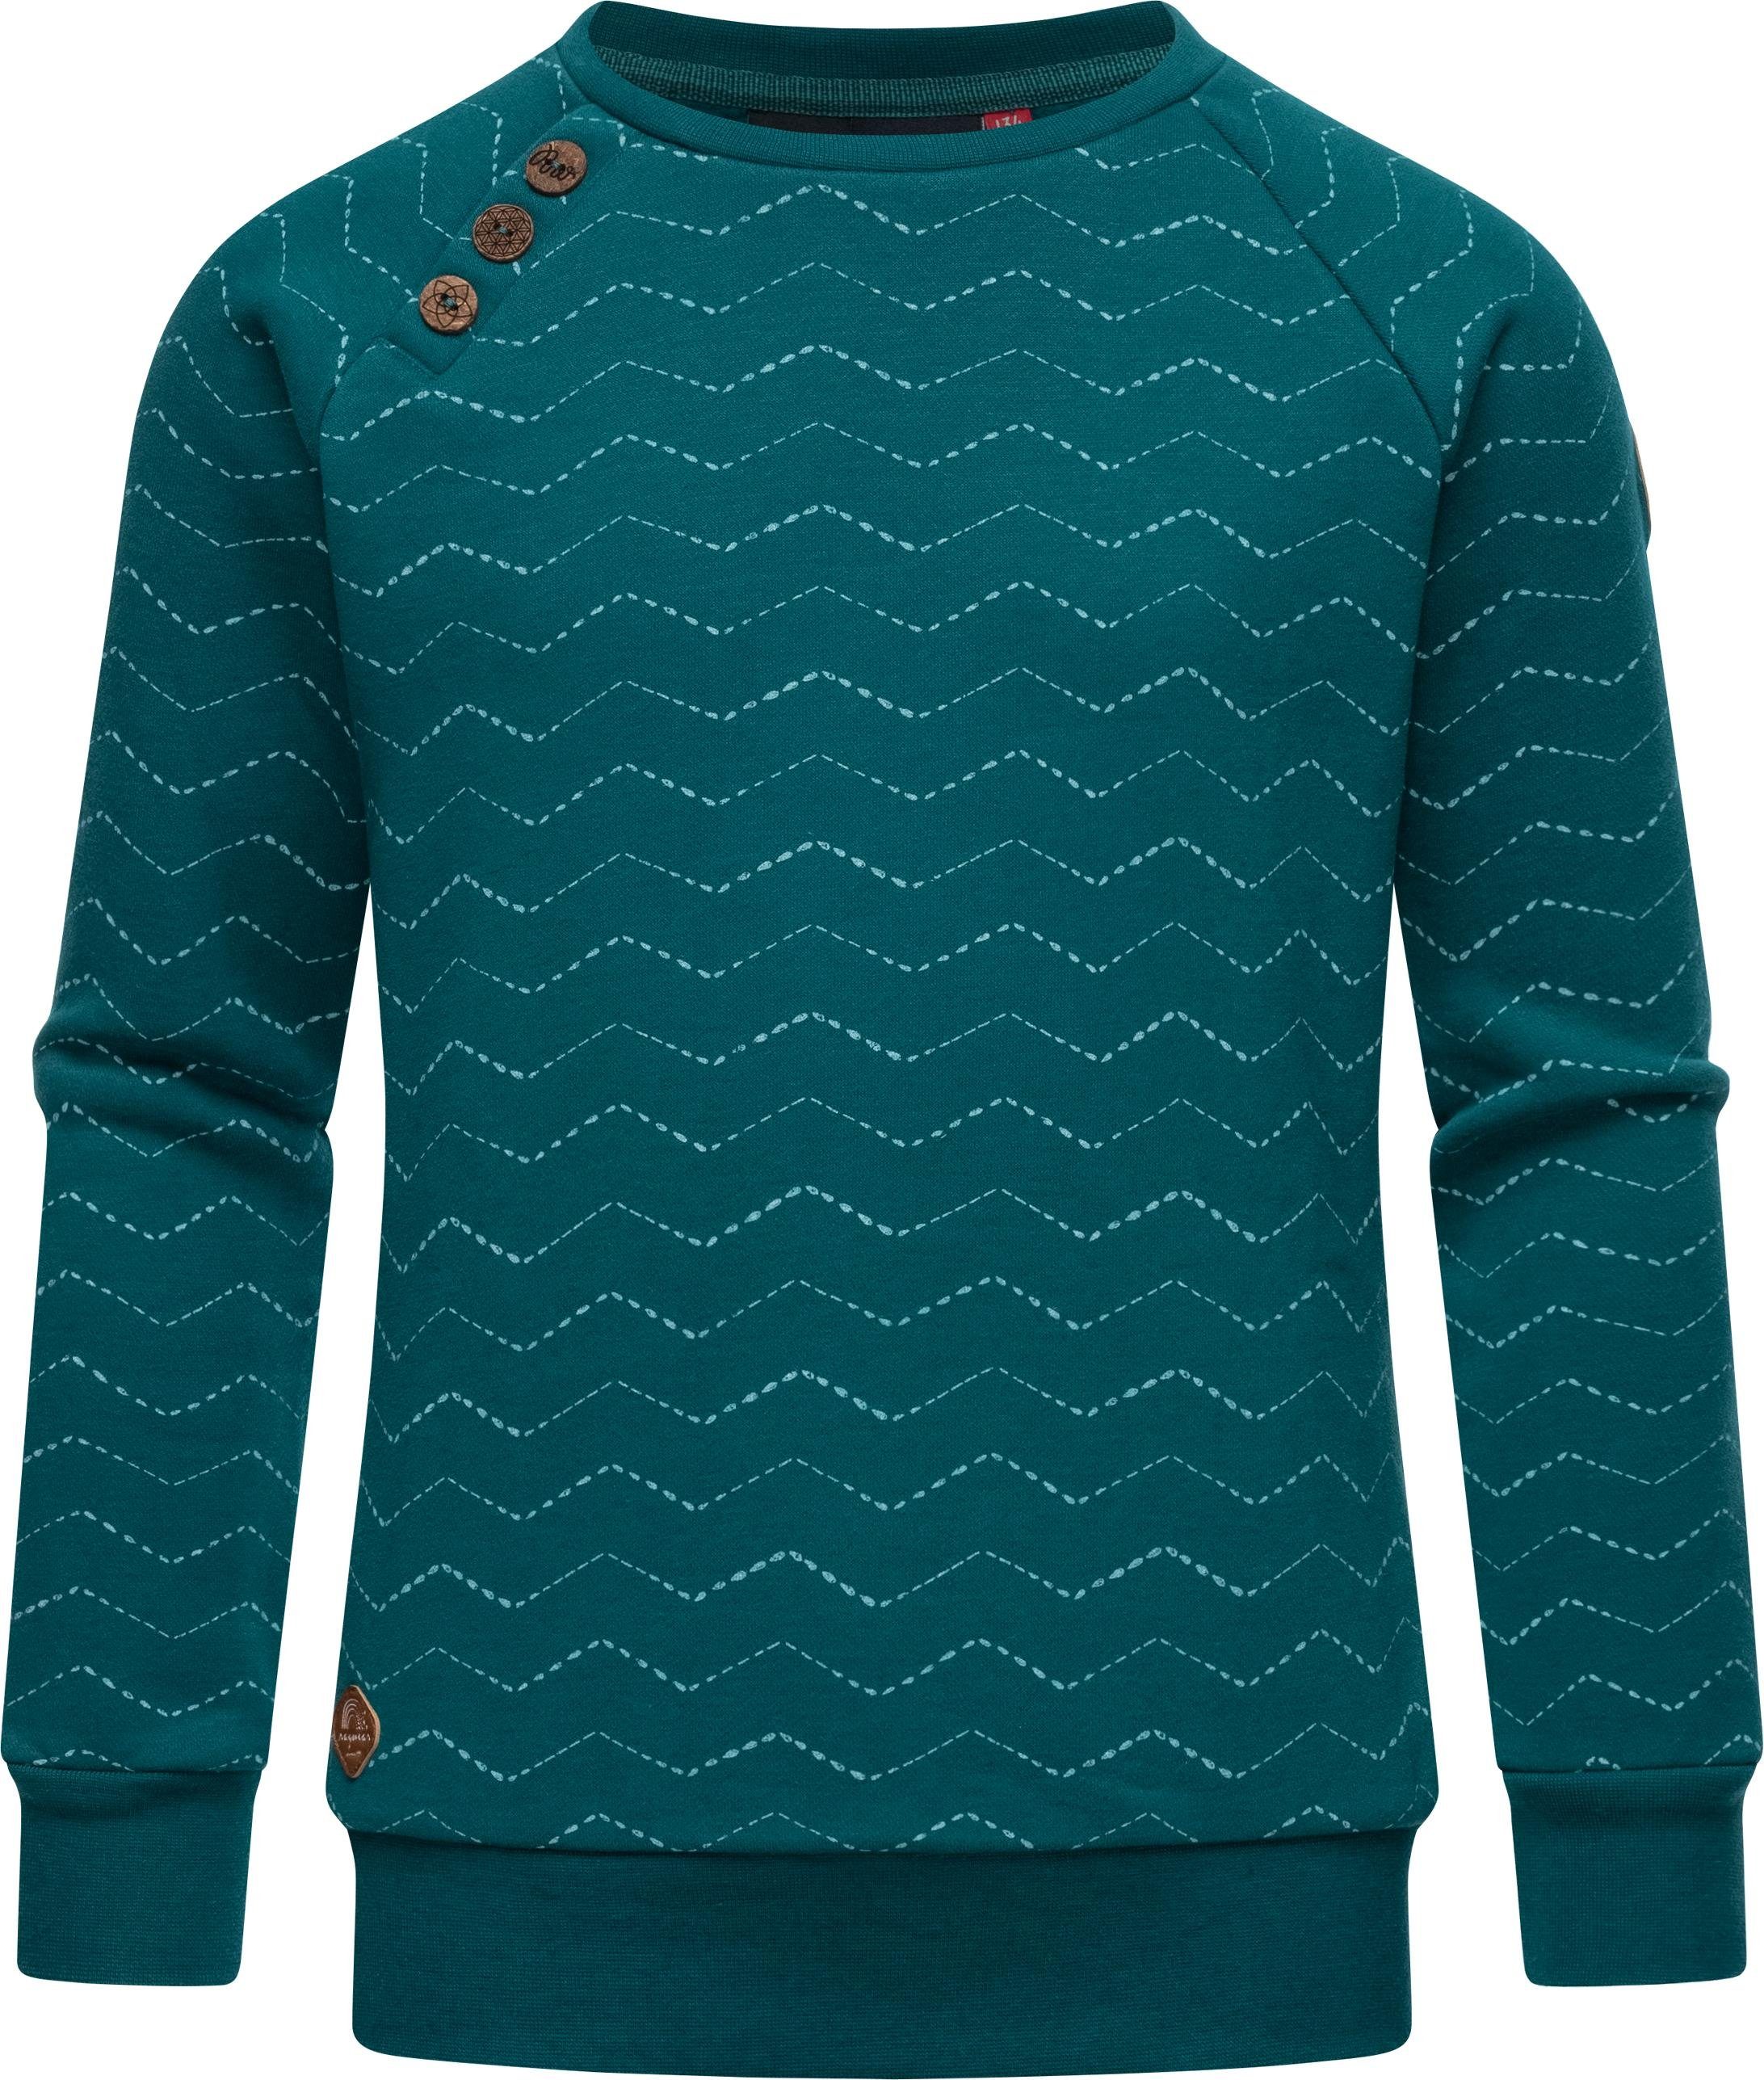 Ragwear Sweater Darinka Zig Zag stylisches Mädchen Sweatshirt mit Zick-Zack-Muster aquablau | Sweatshirts